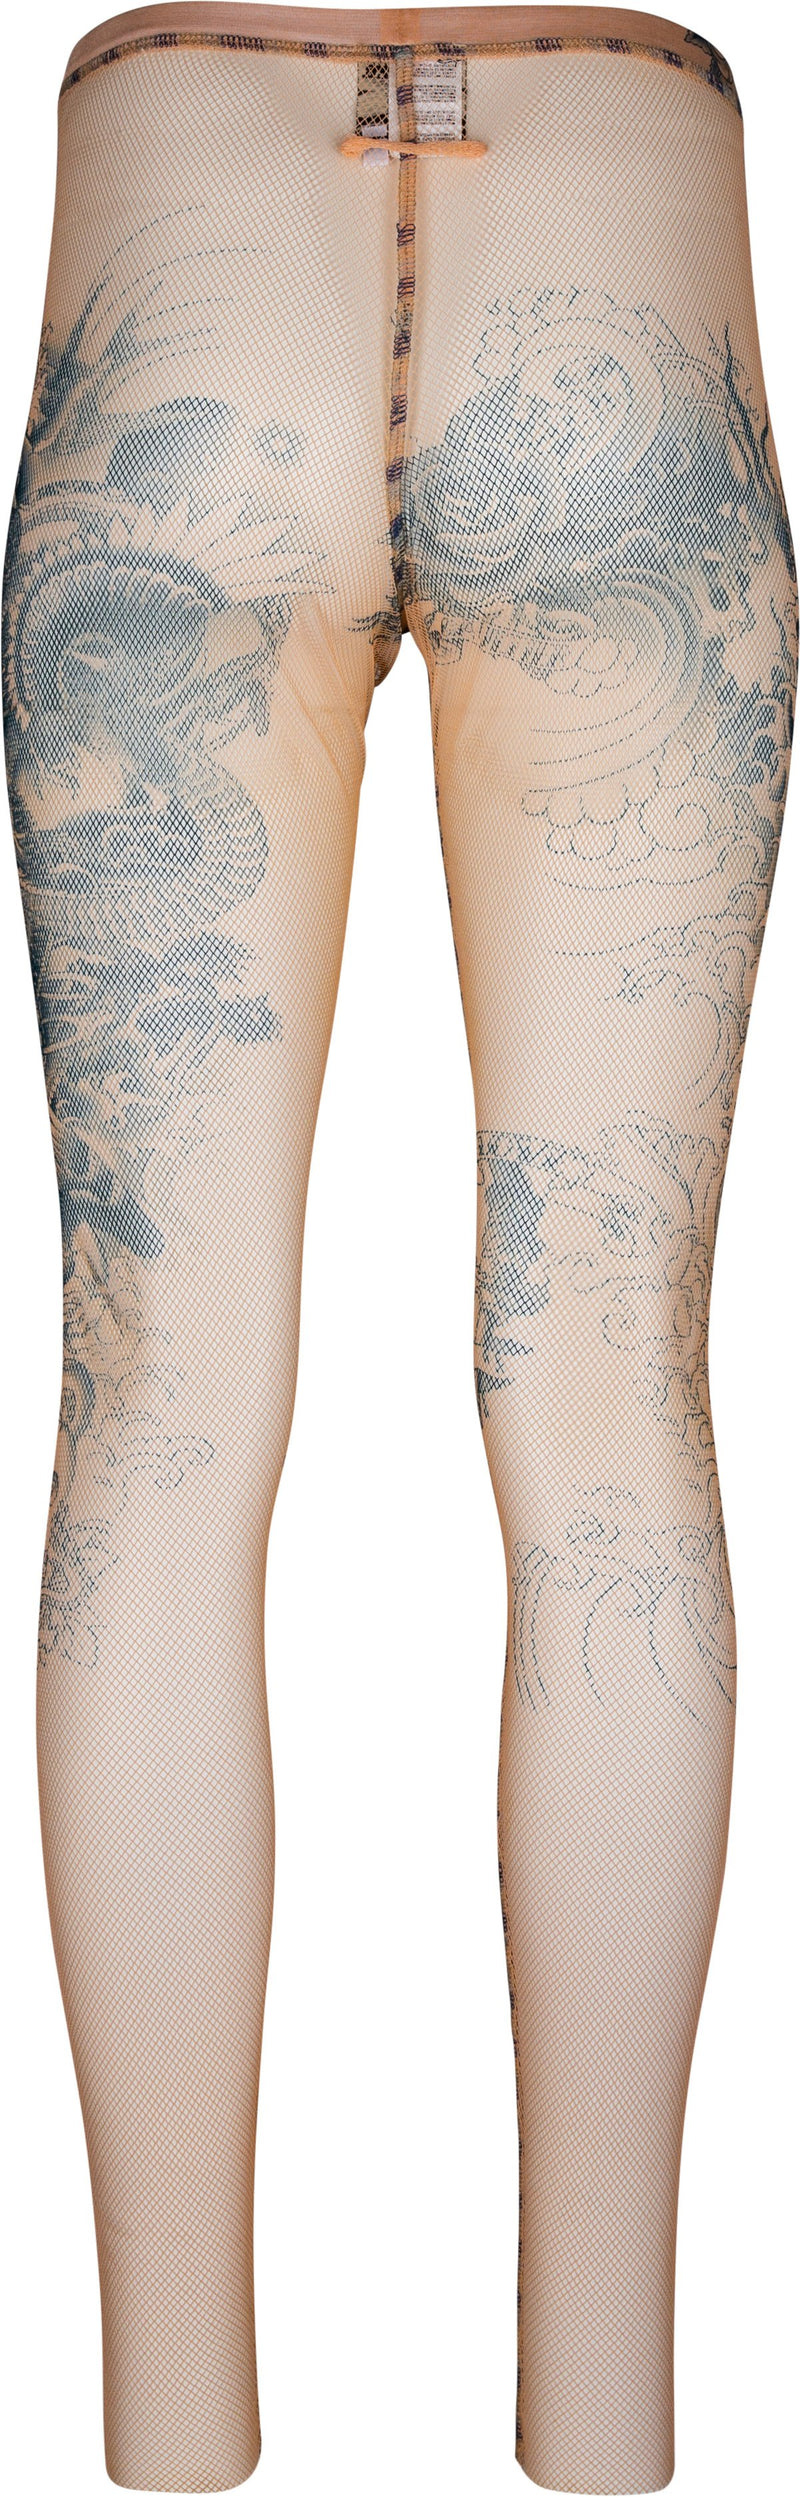 Jean Paul Gaultier Tattoo Mesh Leggings